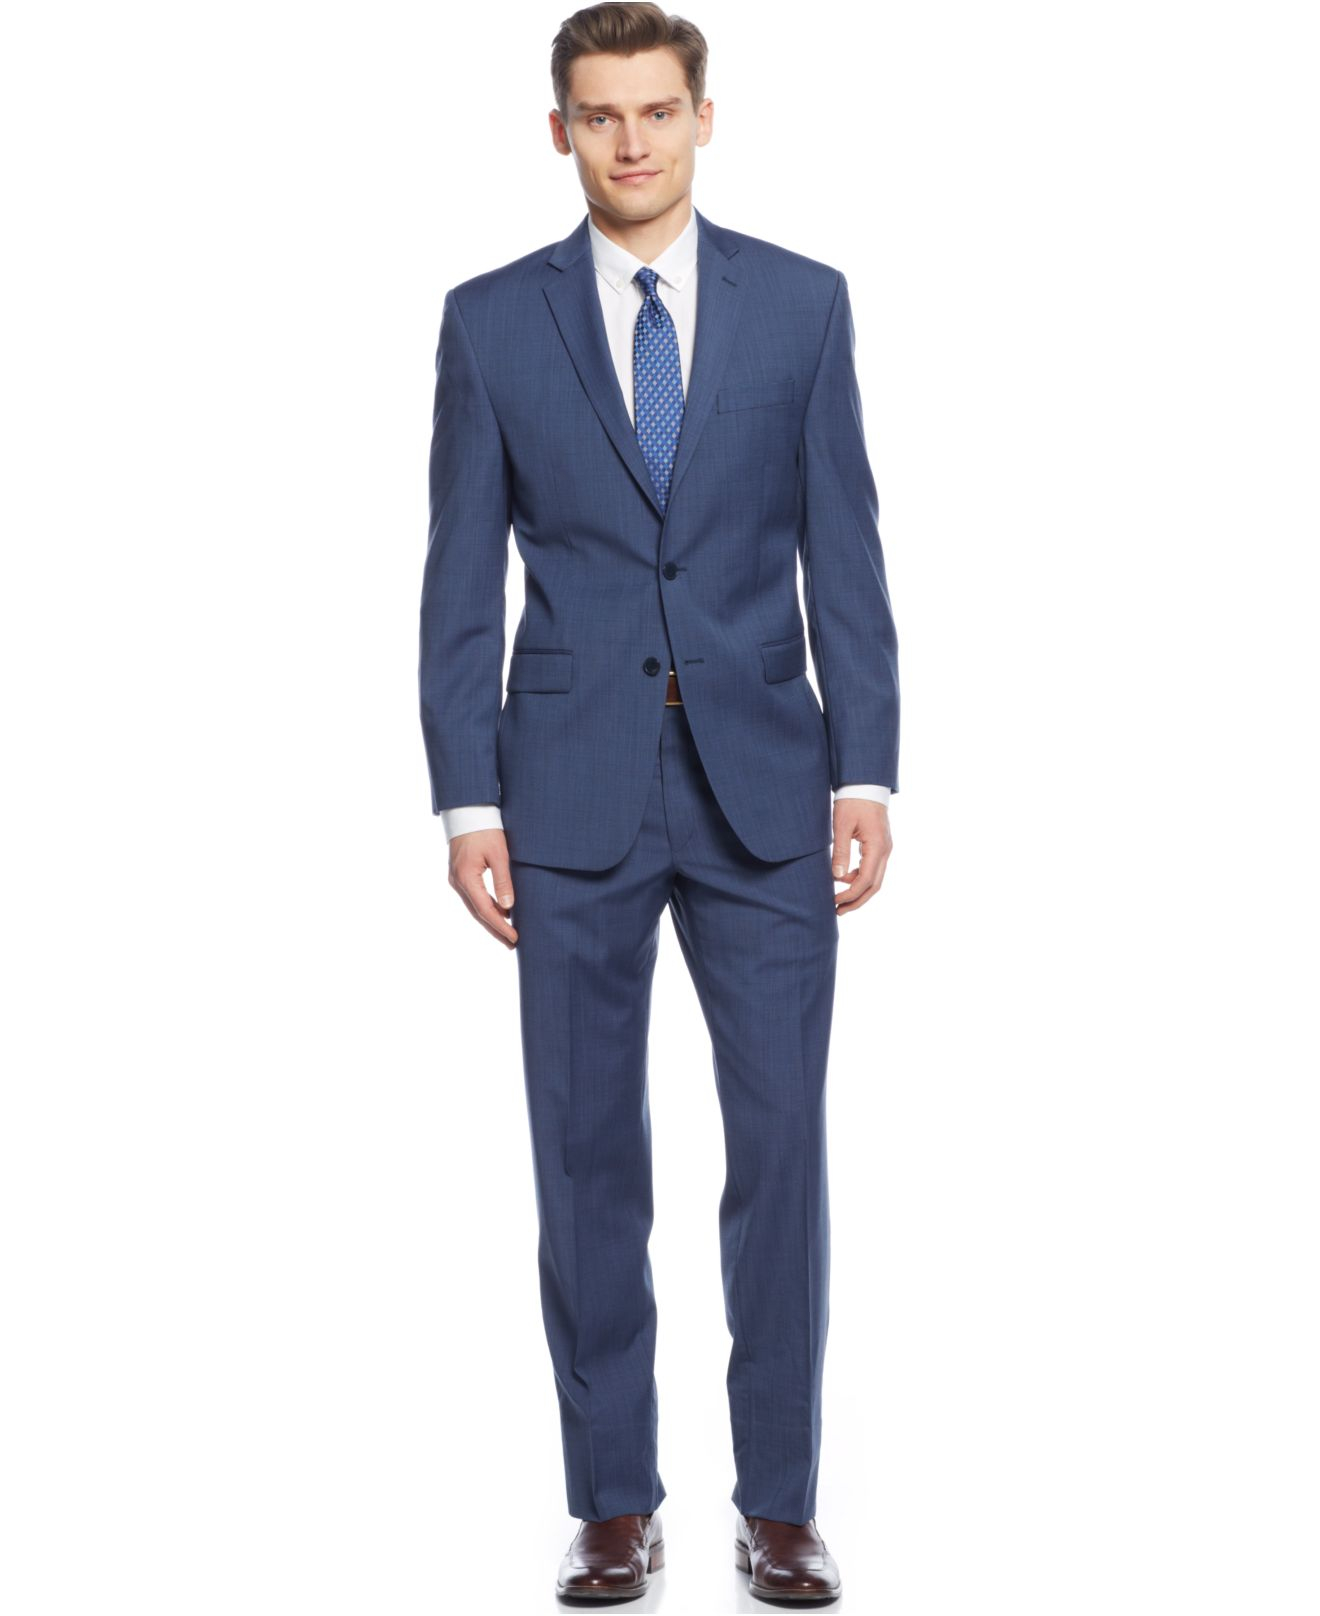 Lyst - Calvin Klein Medium Blue Texture Slim-fit Suit in Blue for Men